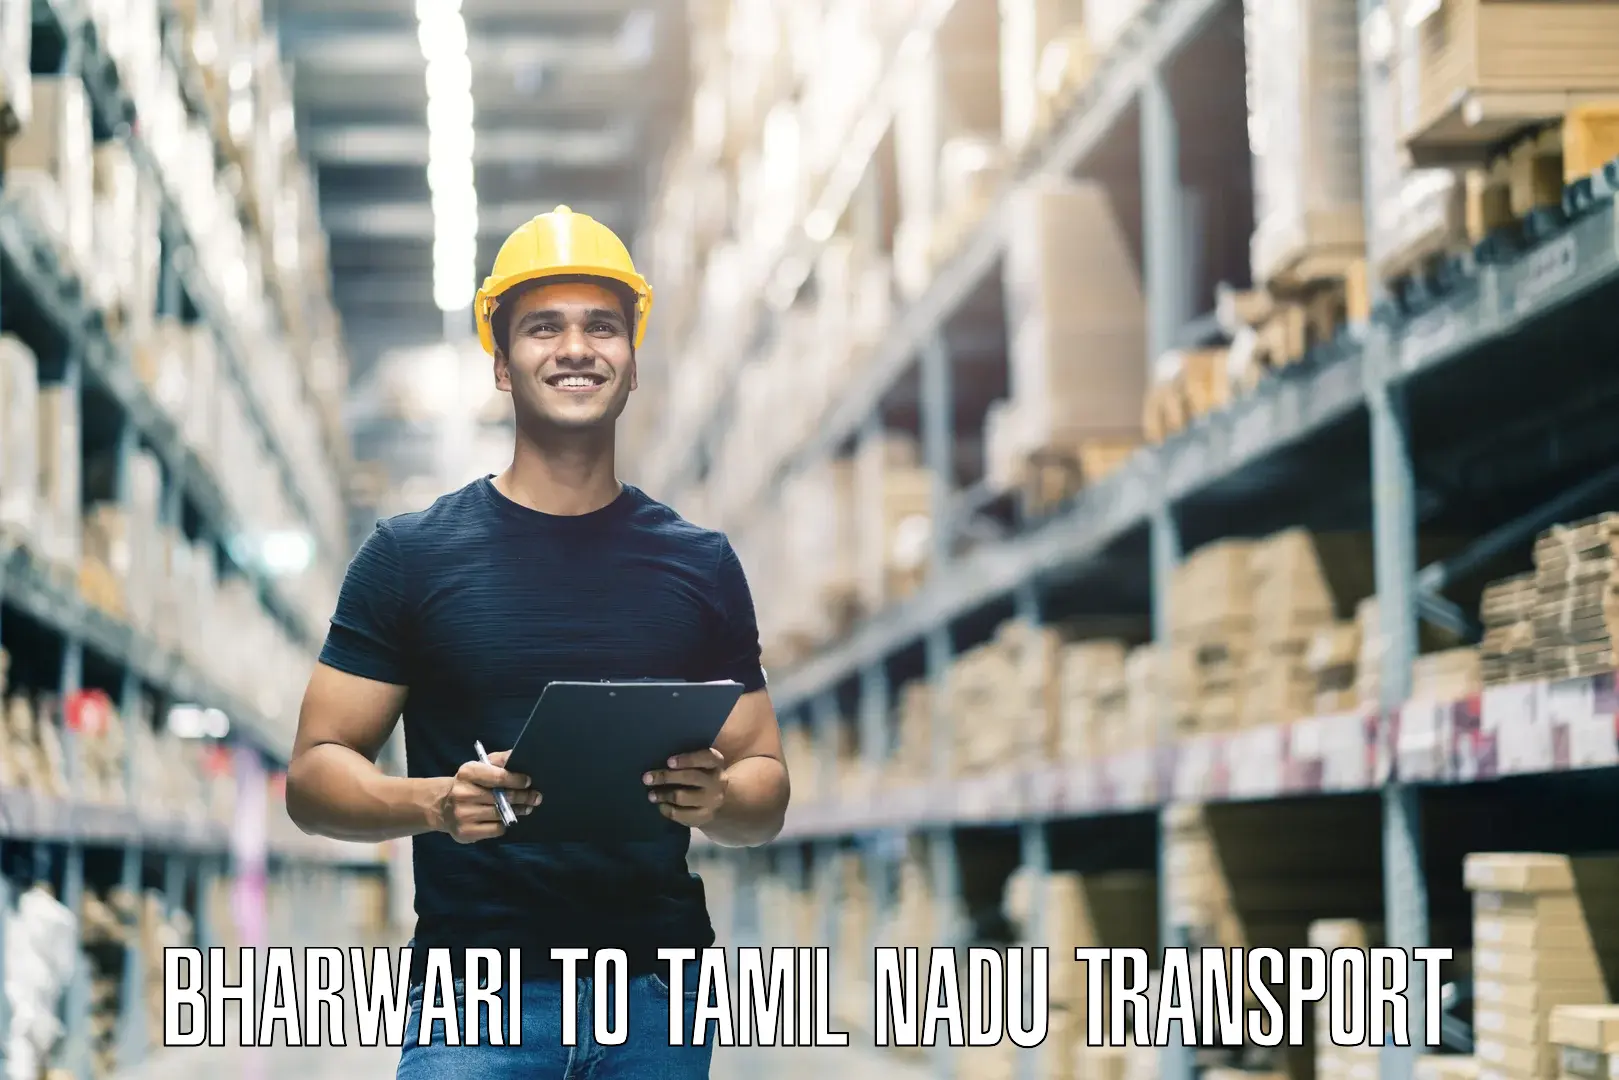 Daily transport service Bharwari to Tamil Nadu